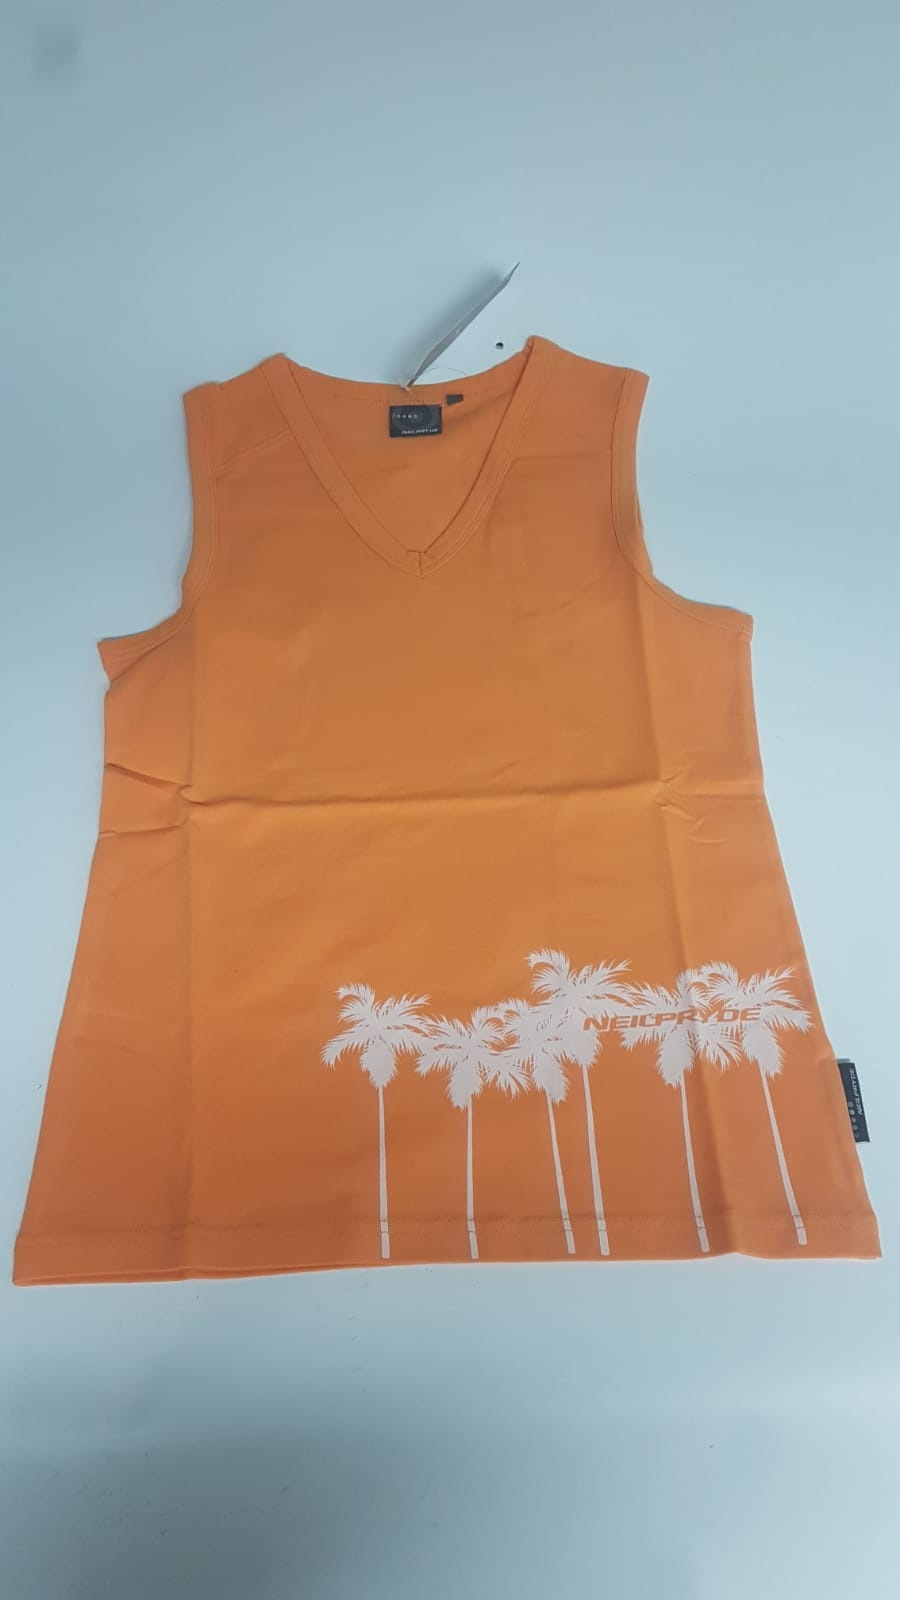 Neilpryde Lady Alley Top orange T-Shirt Shirt Surf Windsurf, Größe: L